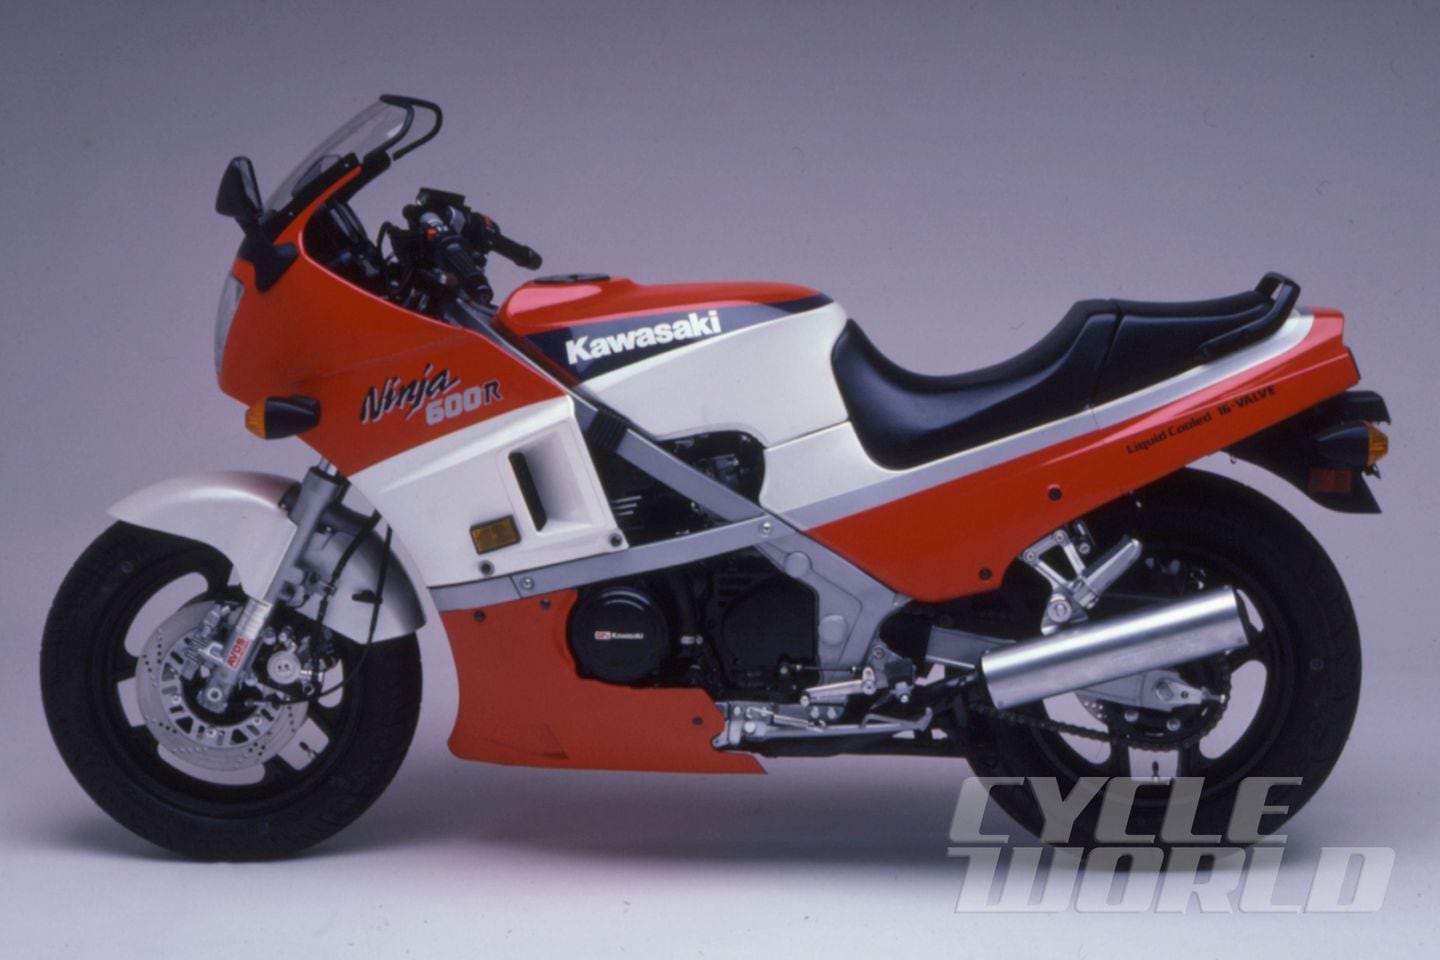 Kawasaki Ninja Motorcycle History: 1984 GPz900 to 1990 ZX-11 